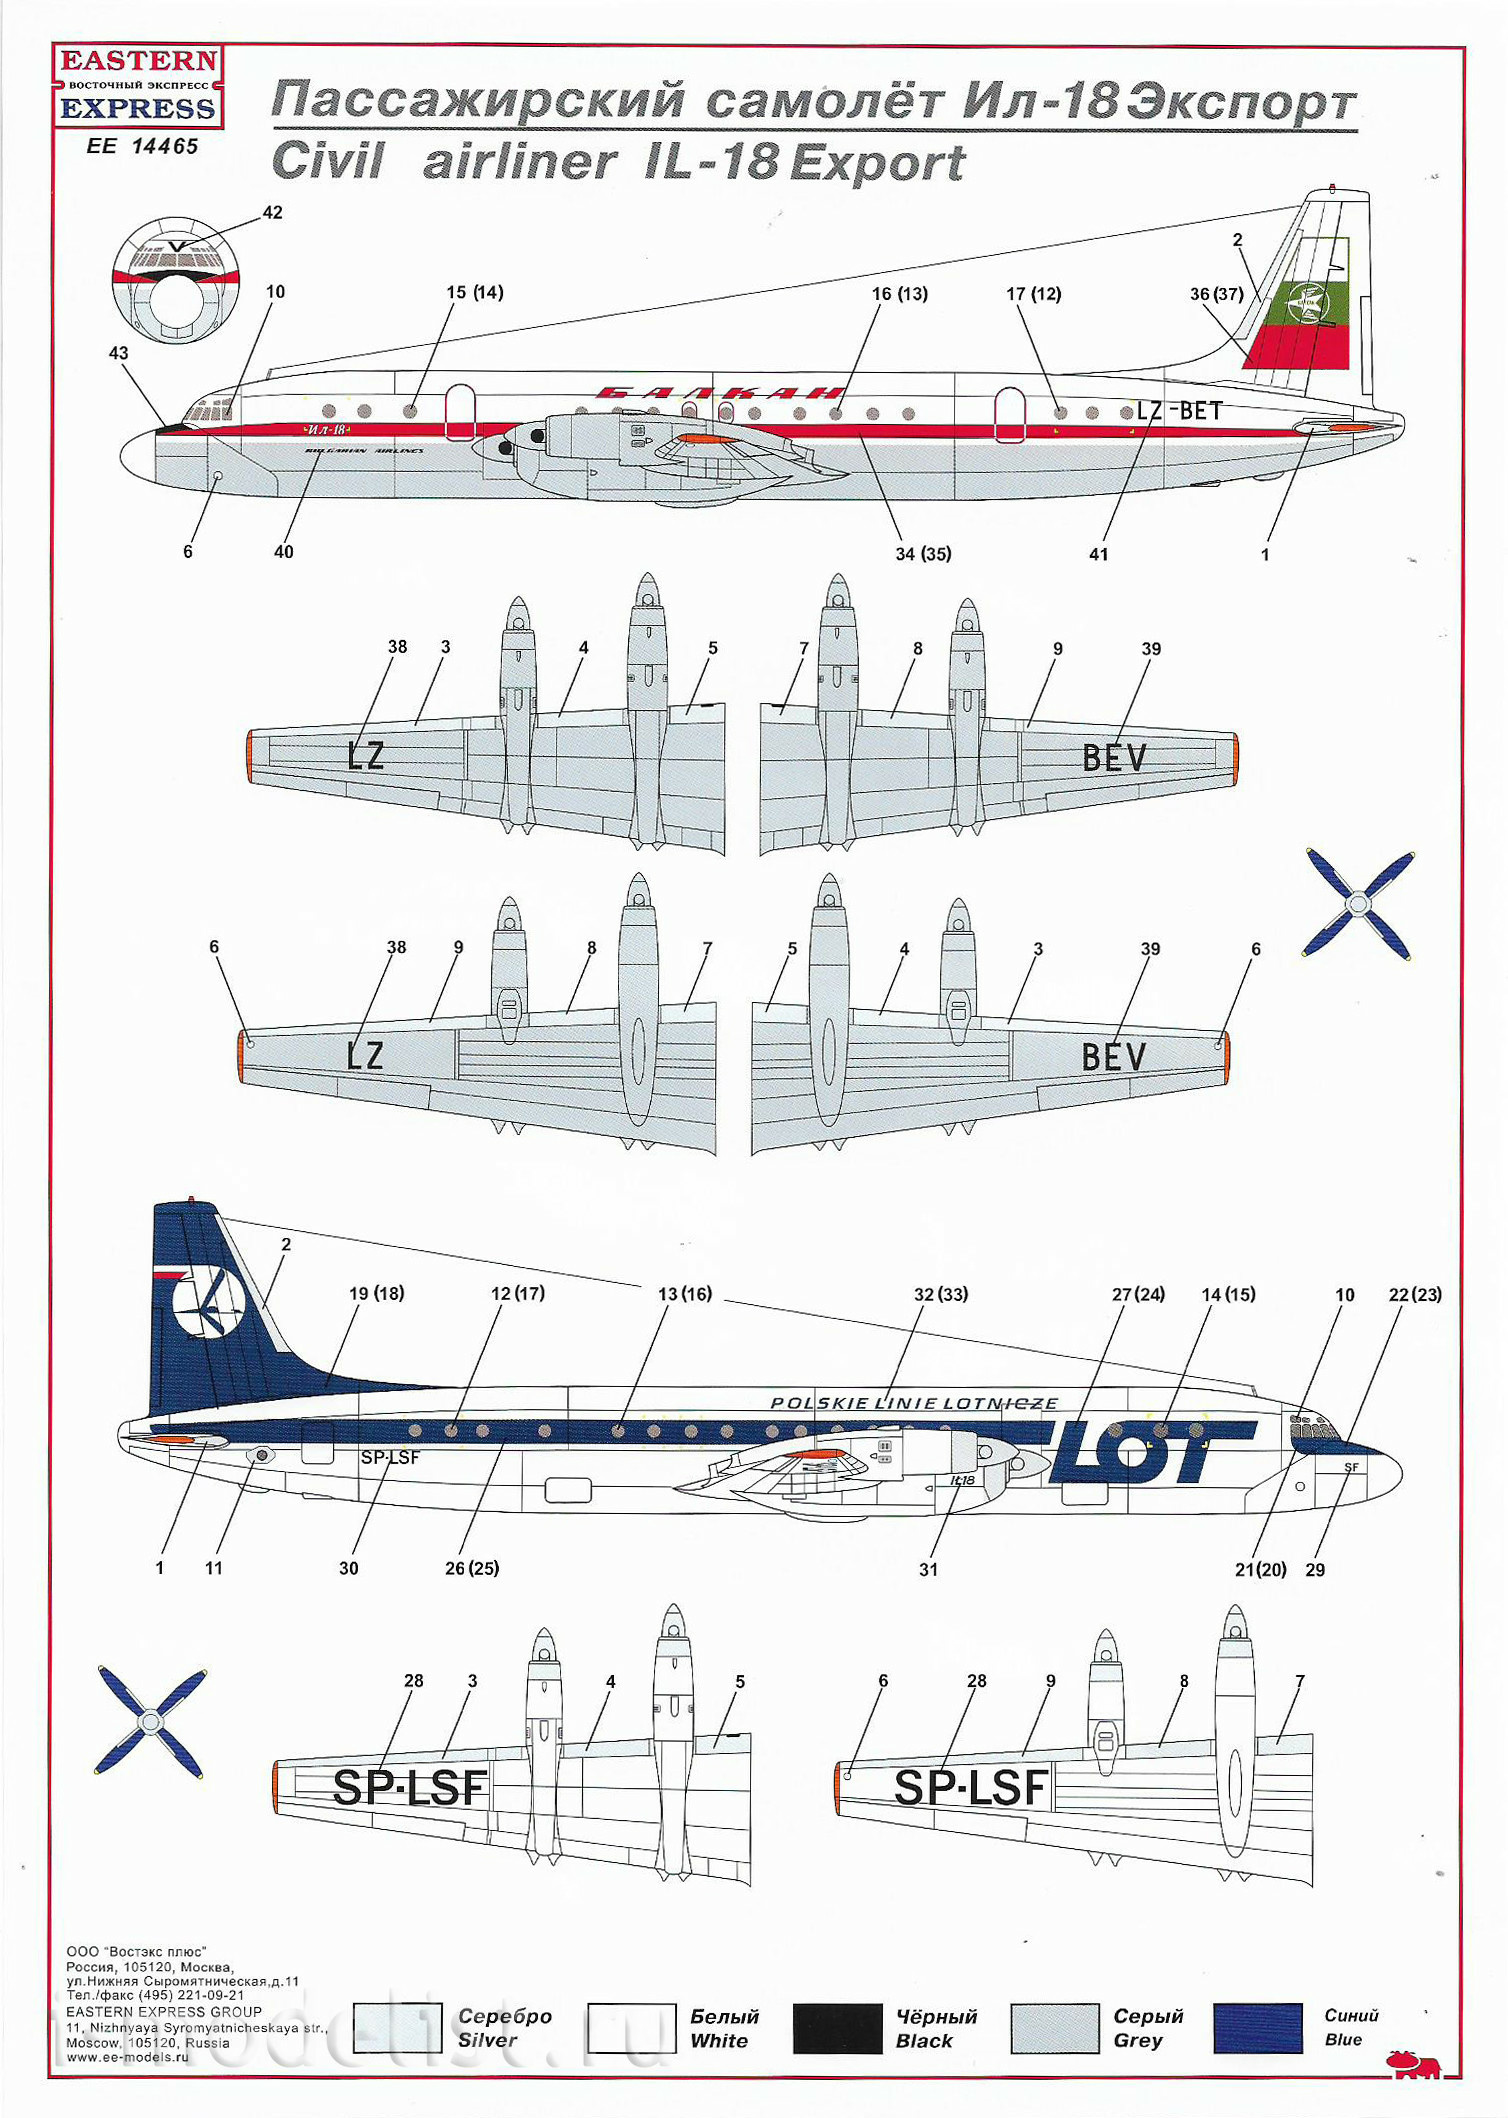 14465 Eastern Express 1/144 scales a Passenger plane Ilyushin Il-18 export version